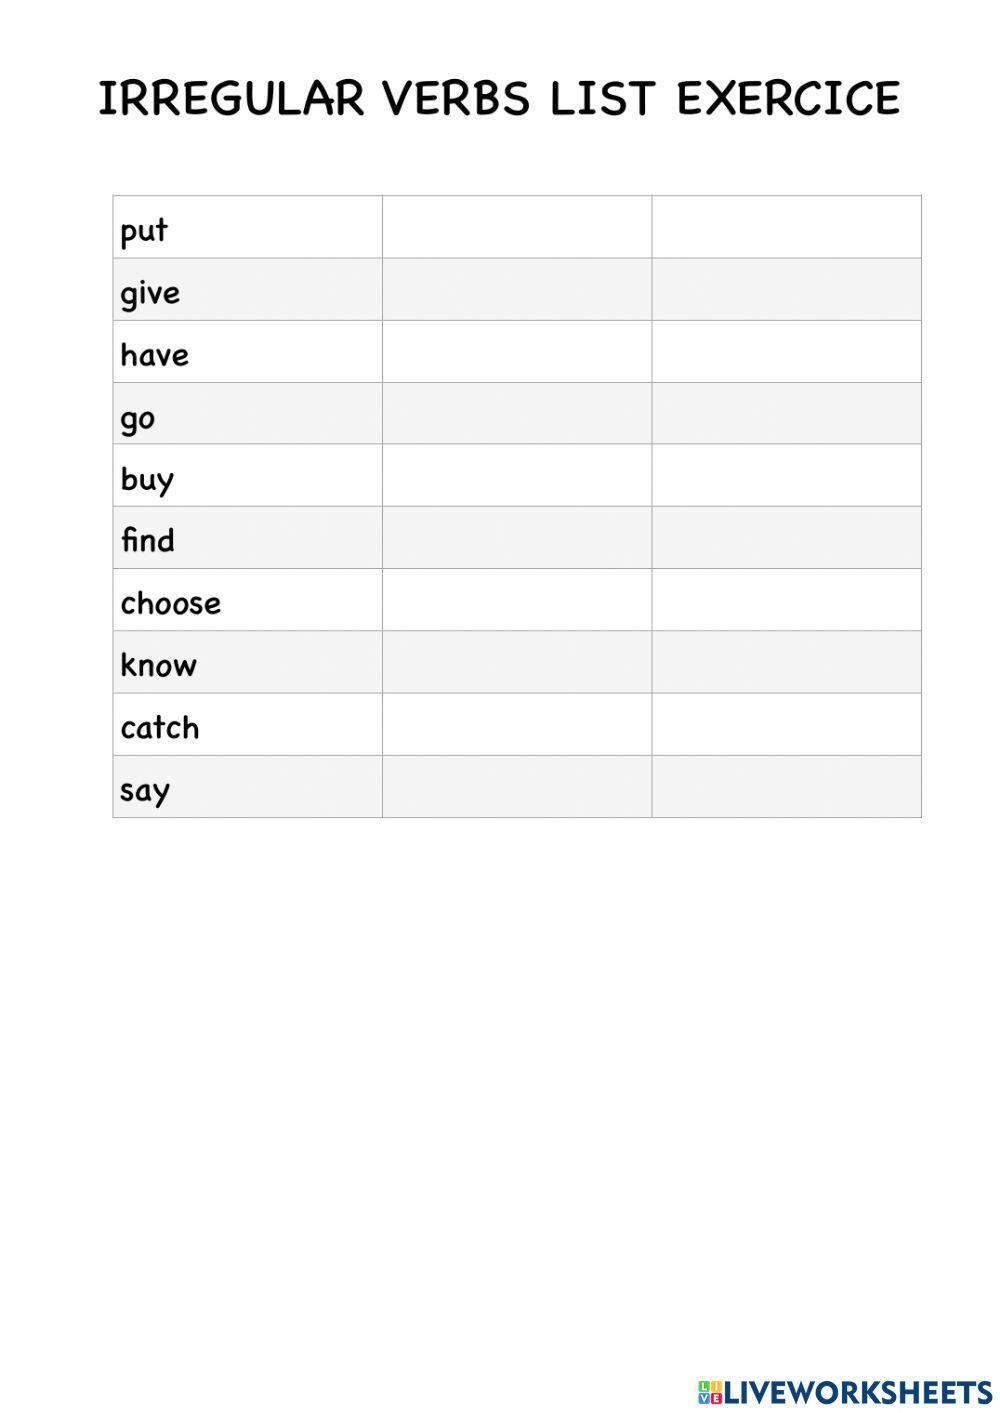 Irregular Verb list exercice